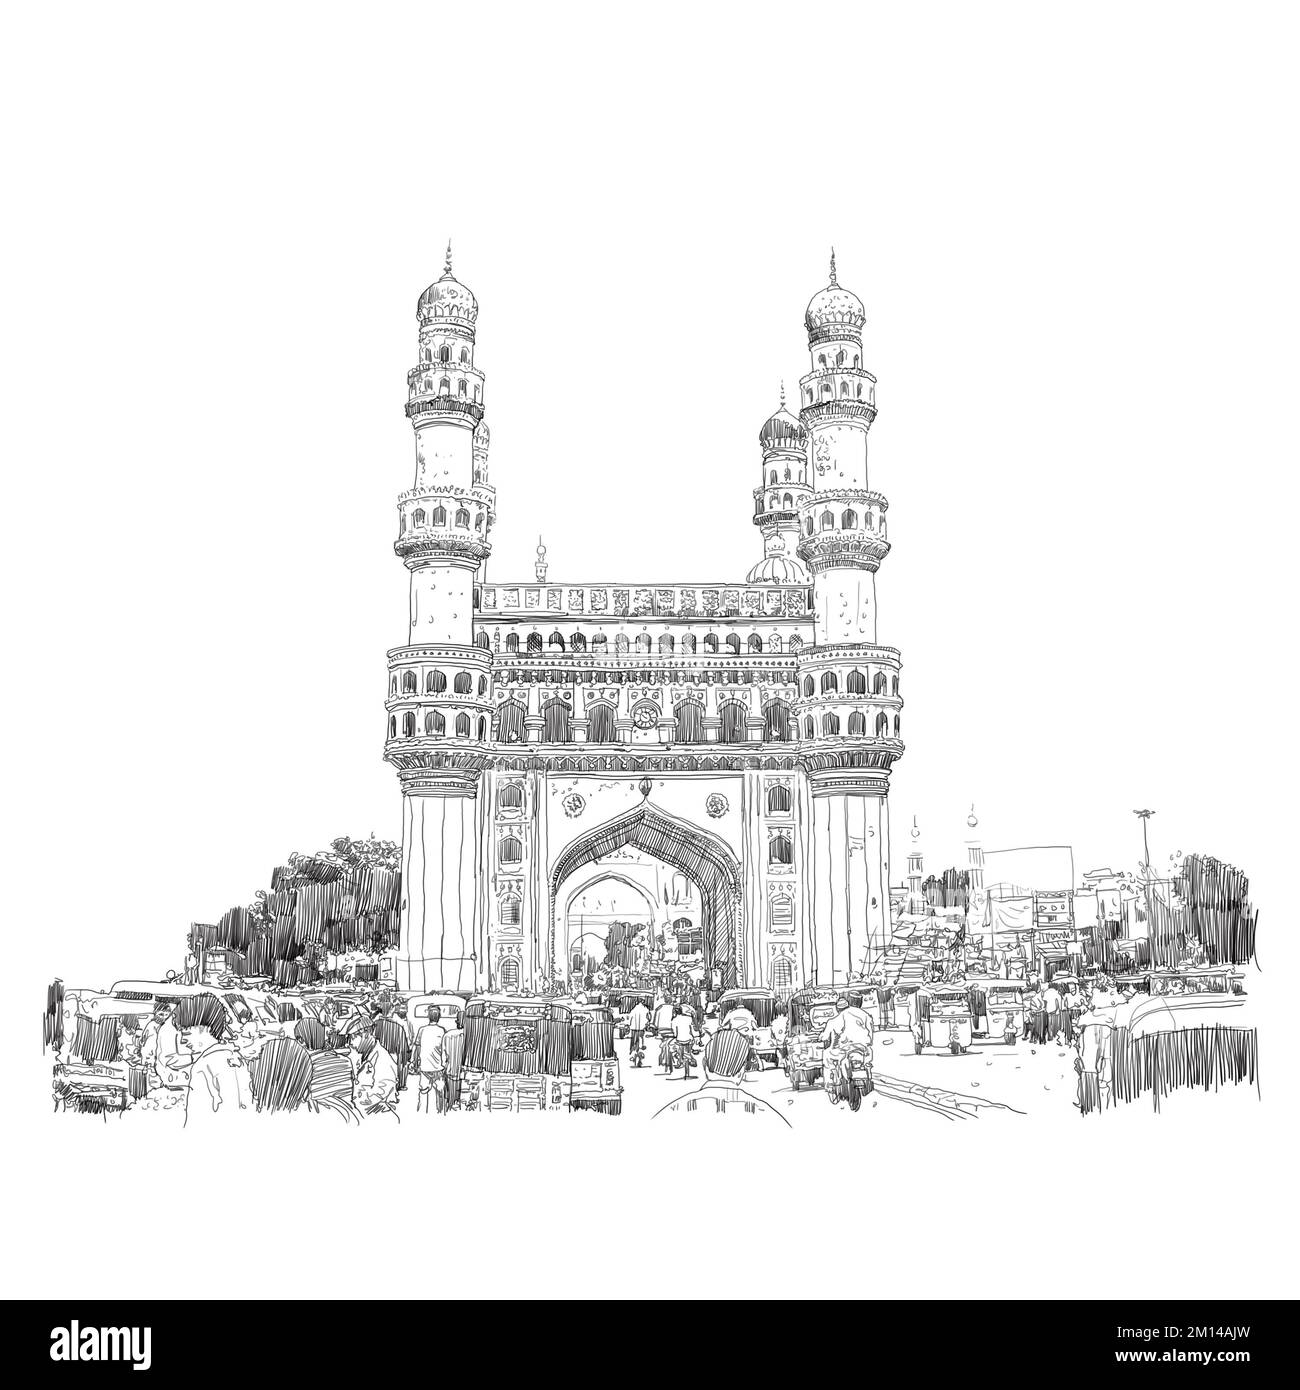 Charminar Hyderabad India, illustration or sketch, hand drawn illustration, illustration on white background Indian tourist attraction Charminar Mahal Stock Photo